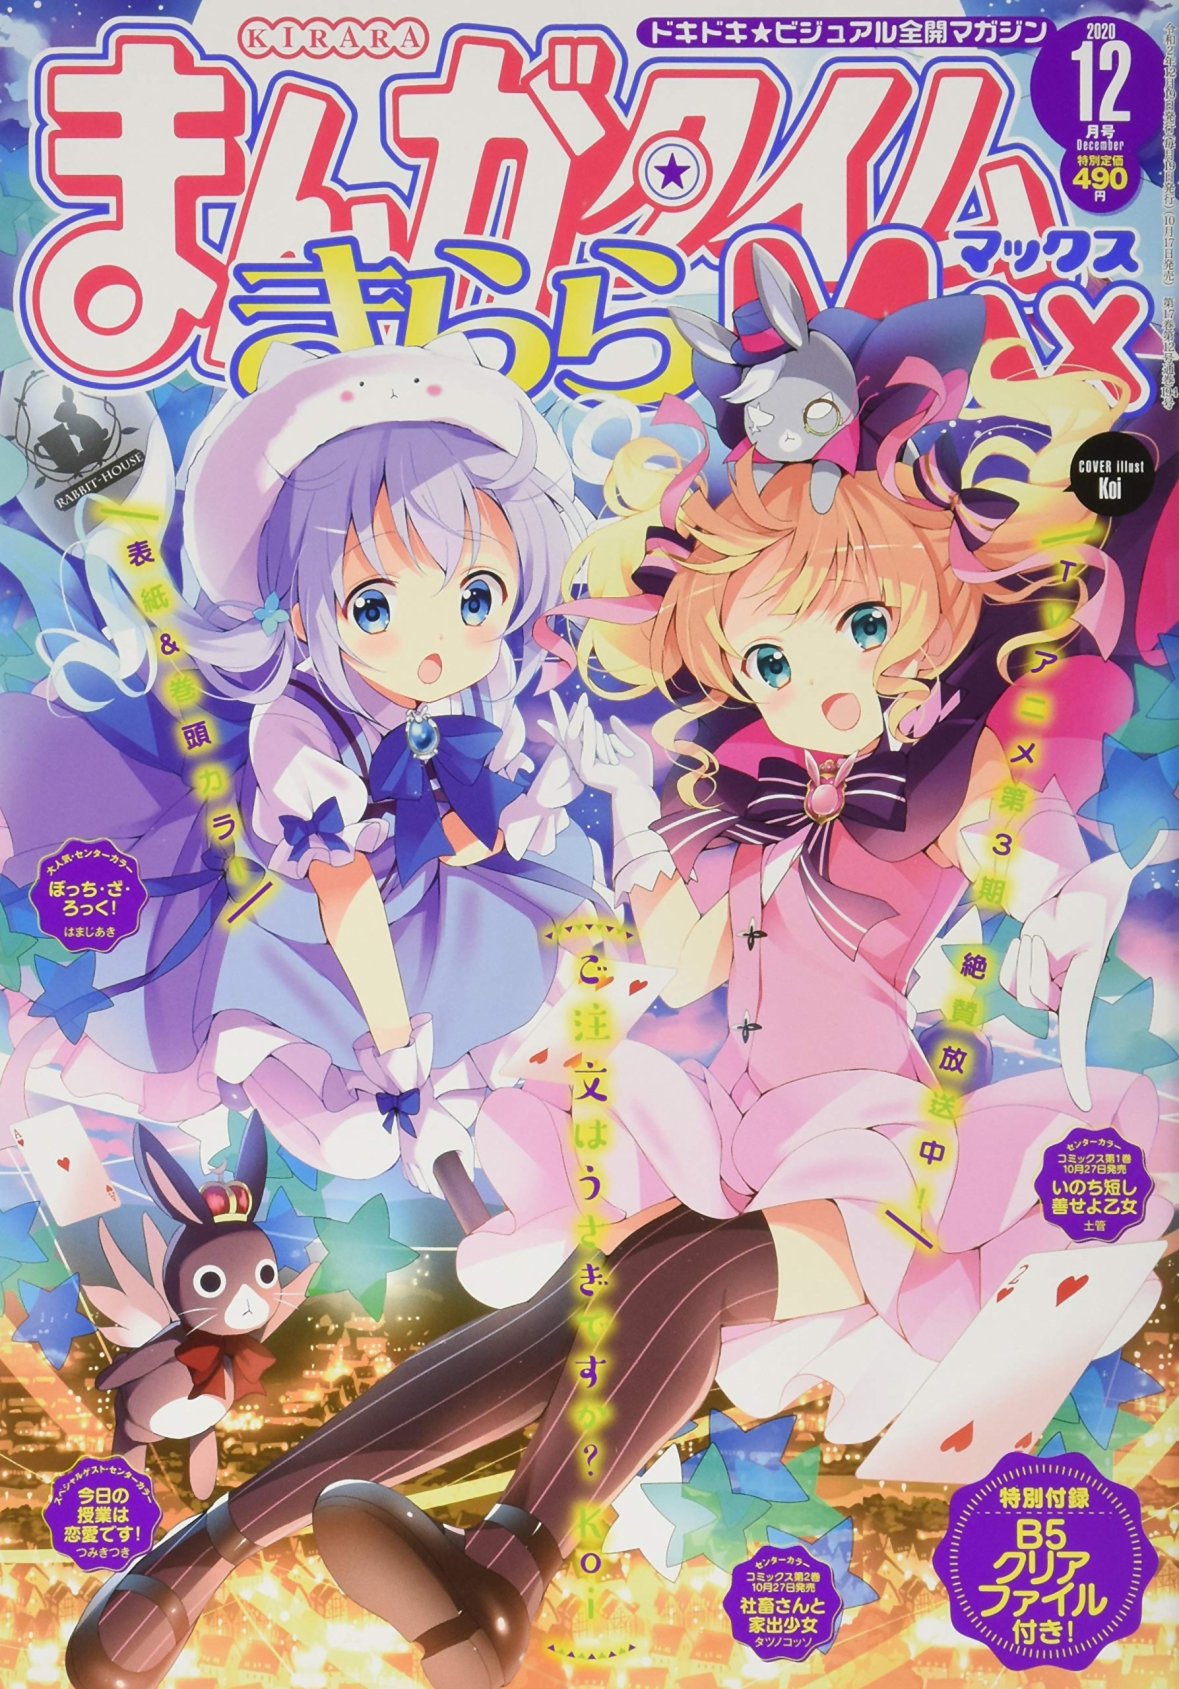 Manga Time Kirara MAX 12月號/2020